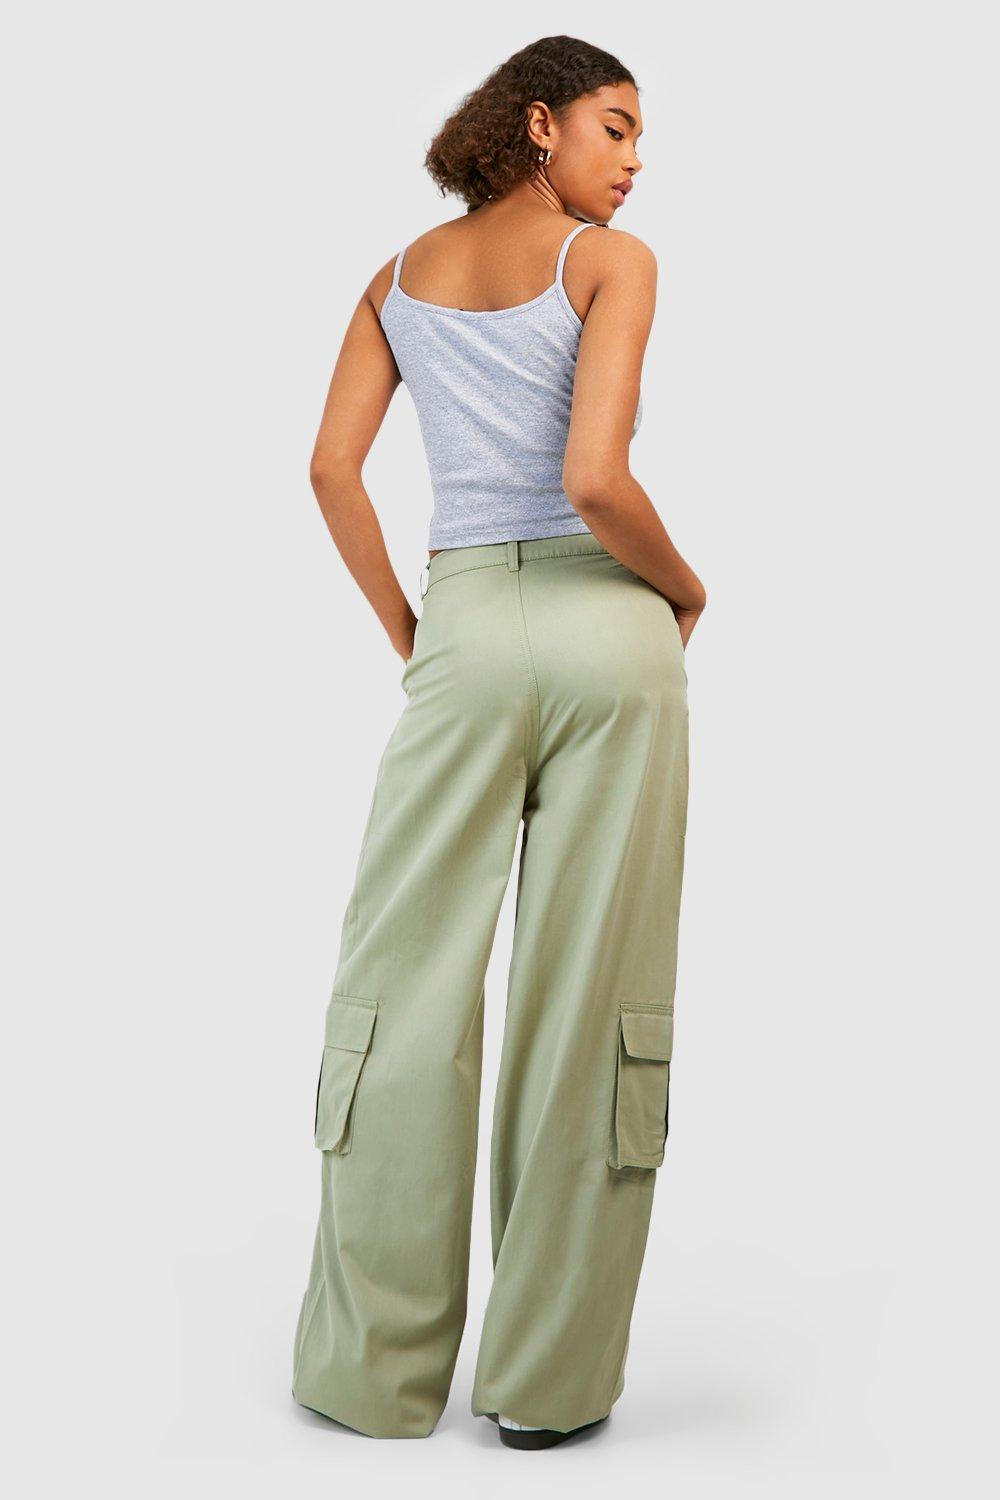 Tall Khaki Pants For Women